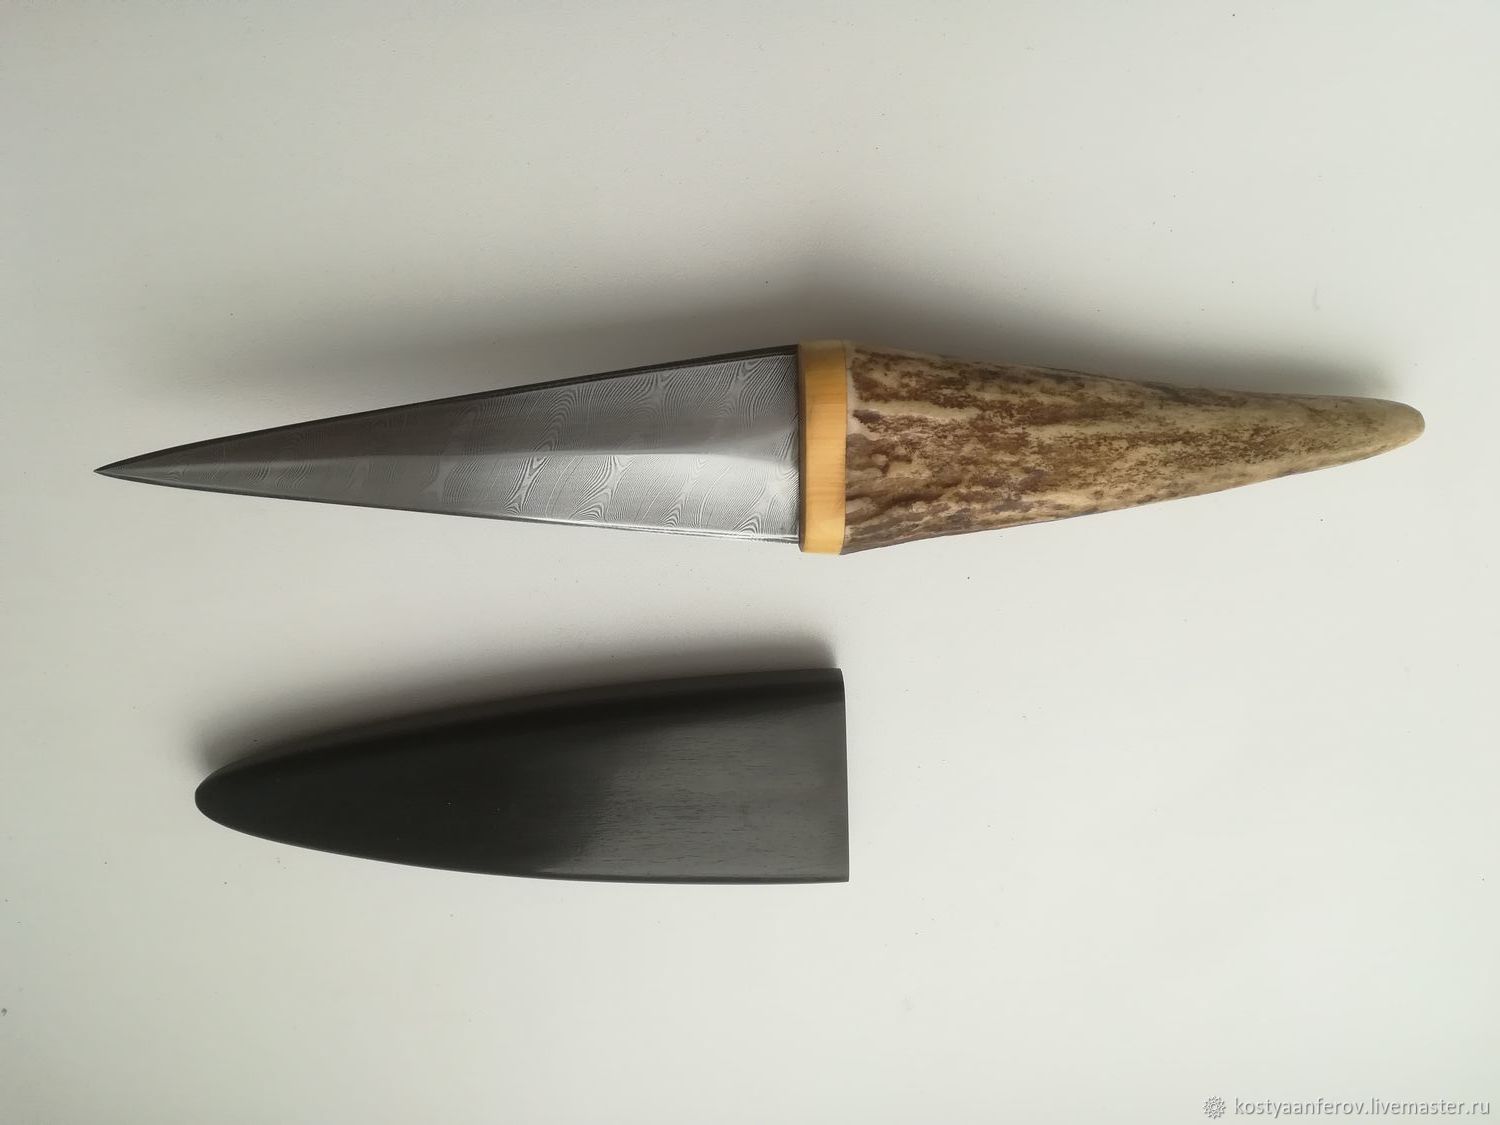 Ritual dagger ' The Sorcerer', Ritual knife, Chrysostom,  Фото №1